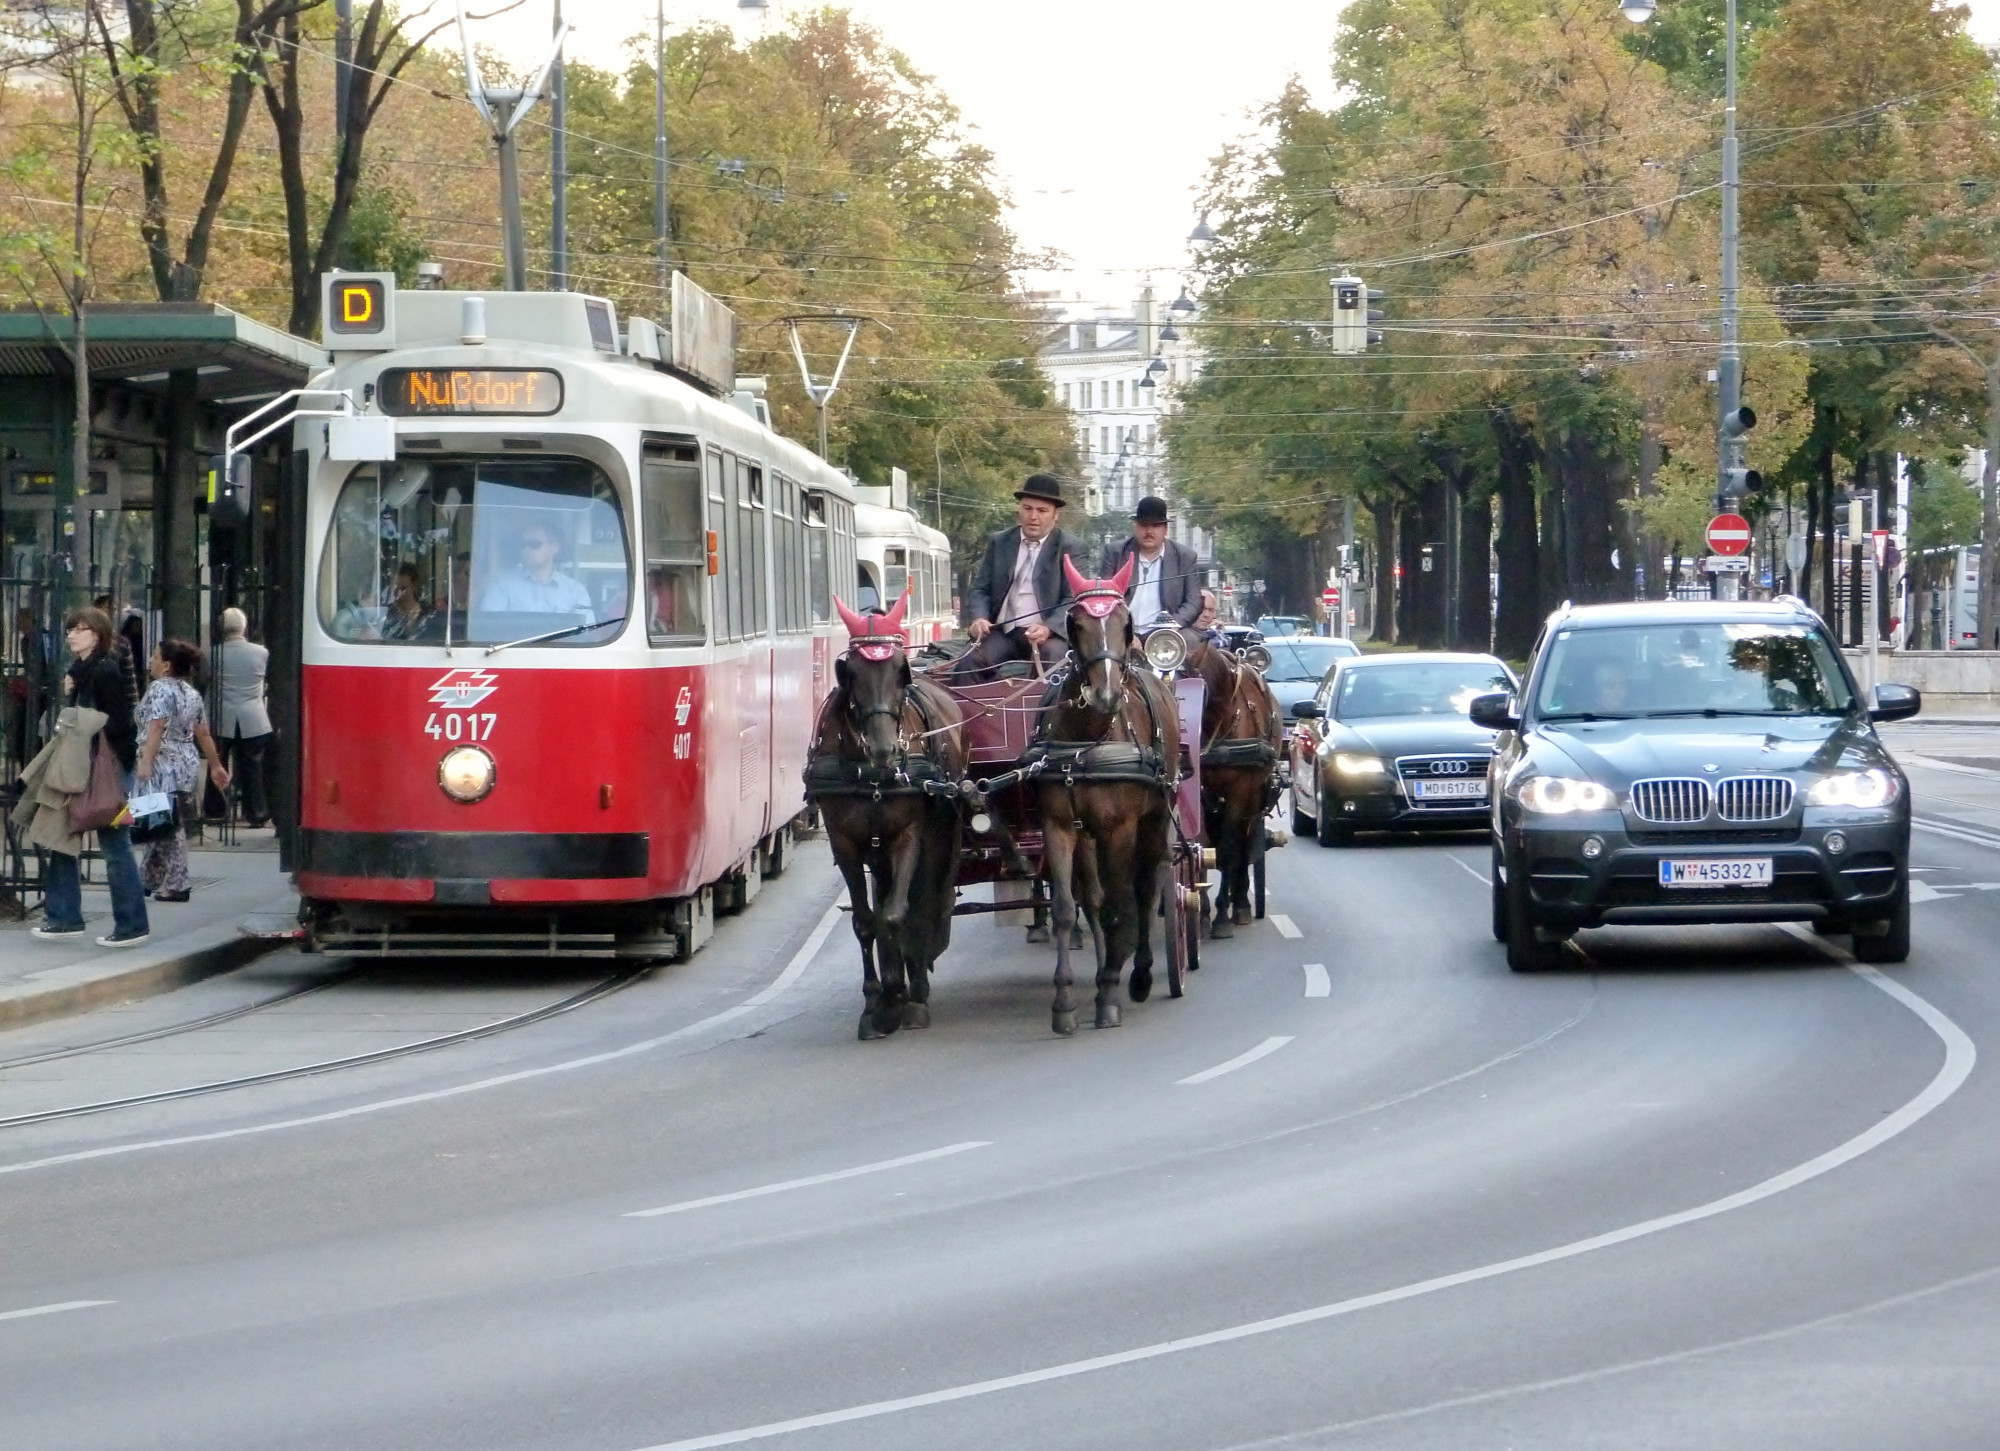 Public Transport wiener-linien tram<br/>
Horse & Buggy